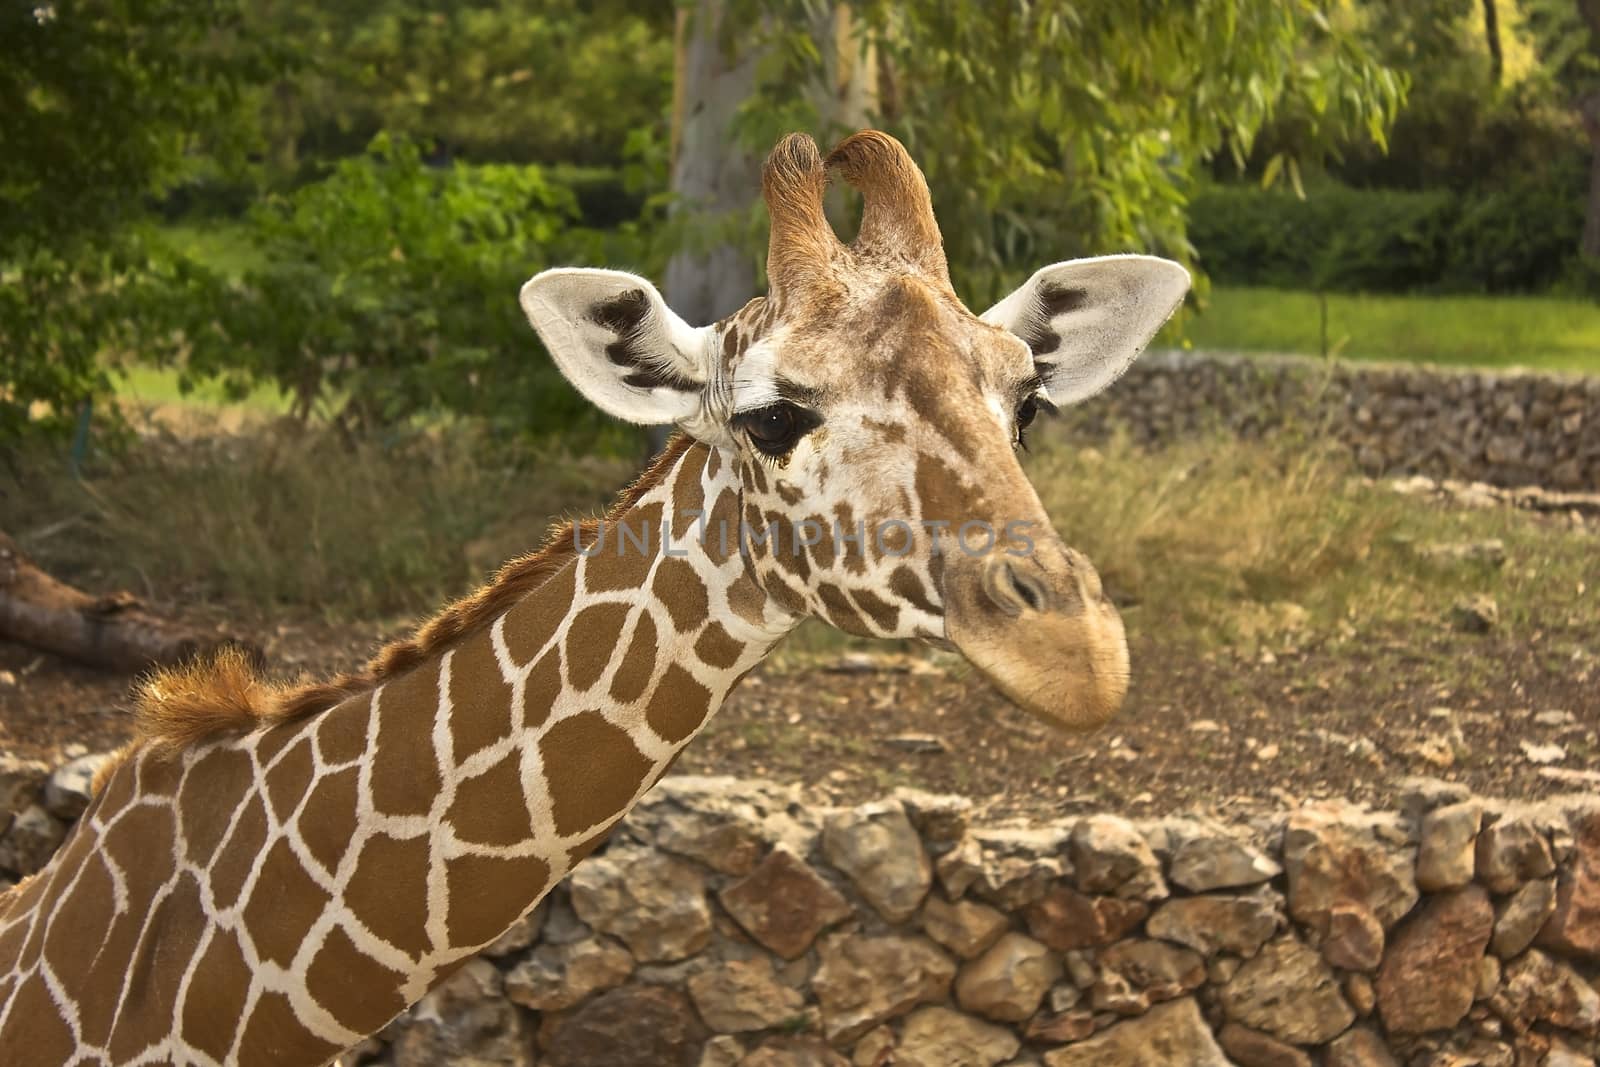 Giraffe at the Zoo Park by irisphoto4